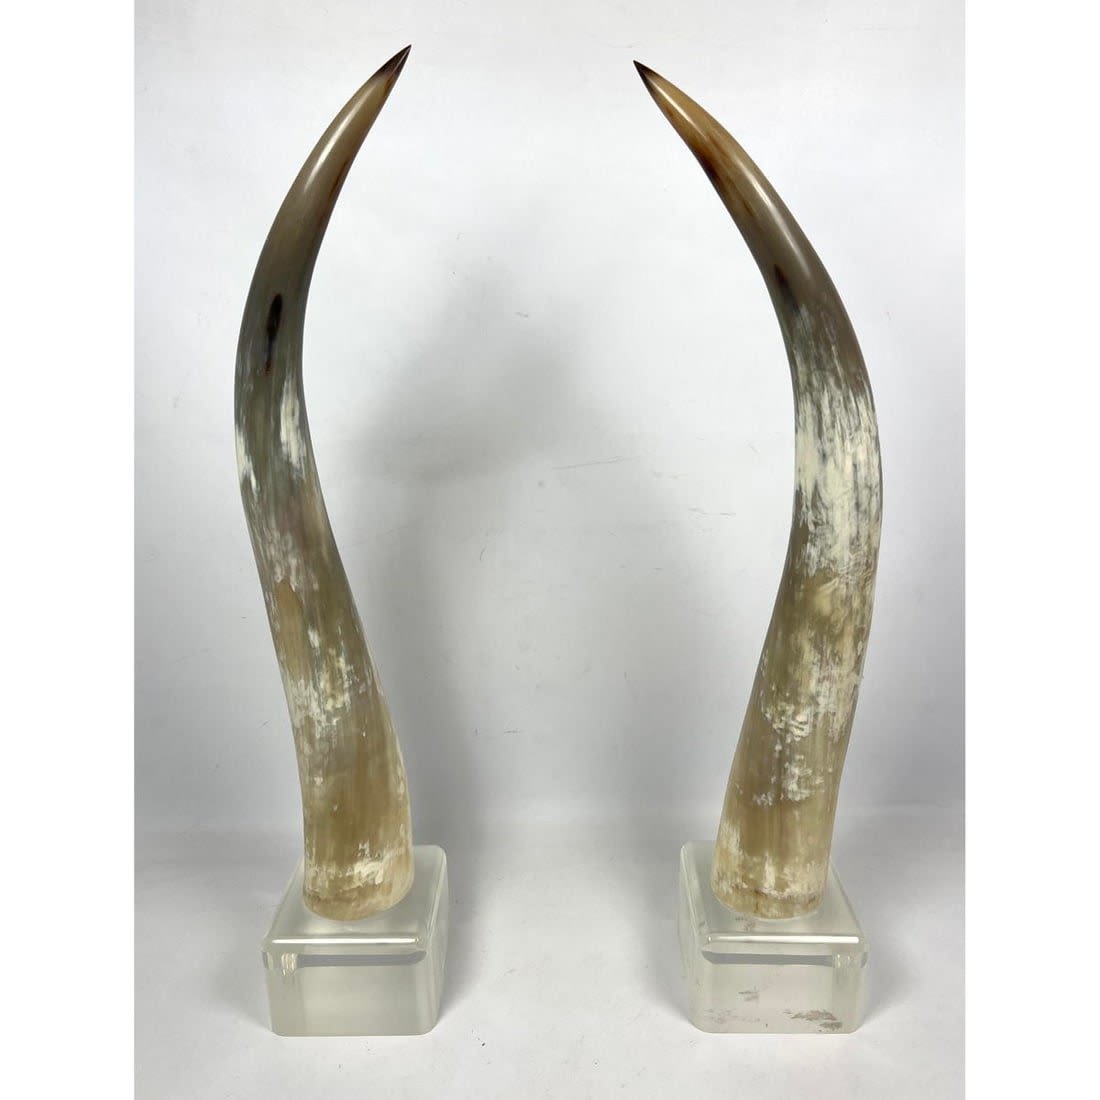 Pair Natural steer Horn Table Sculptures.